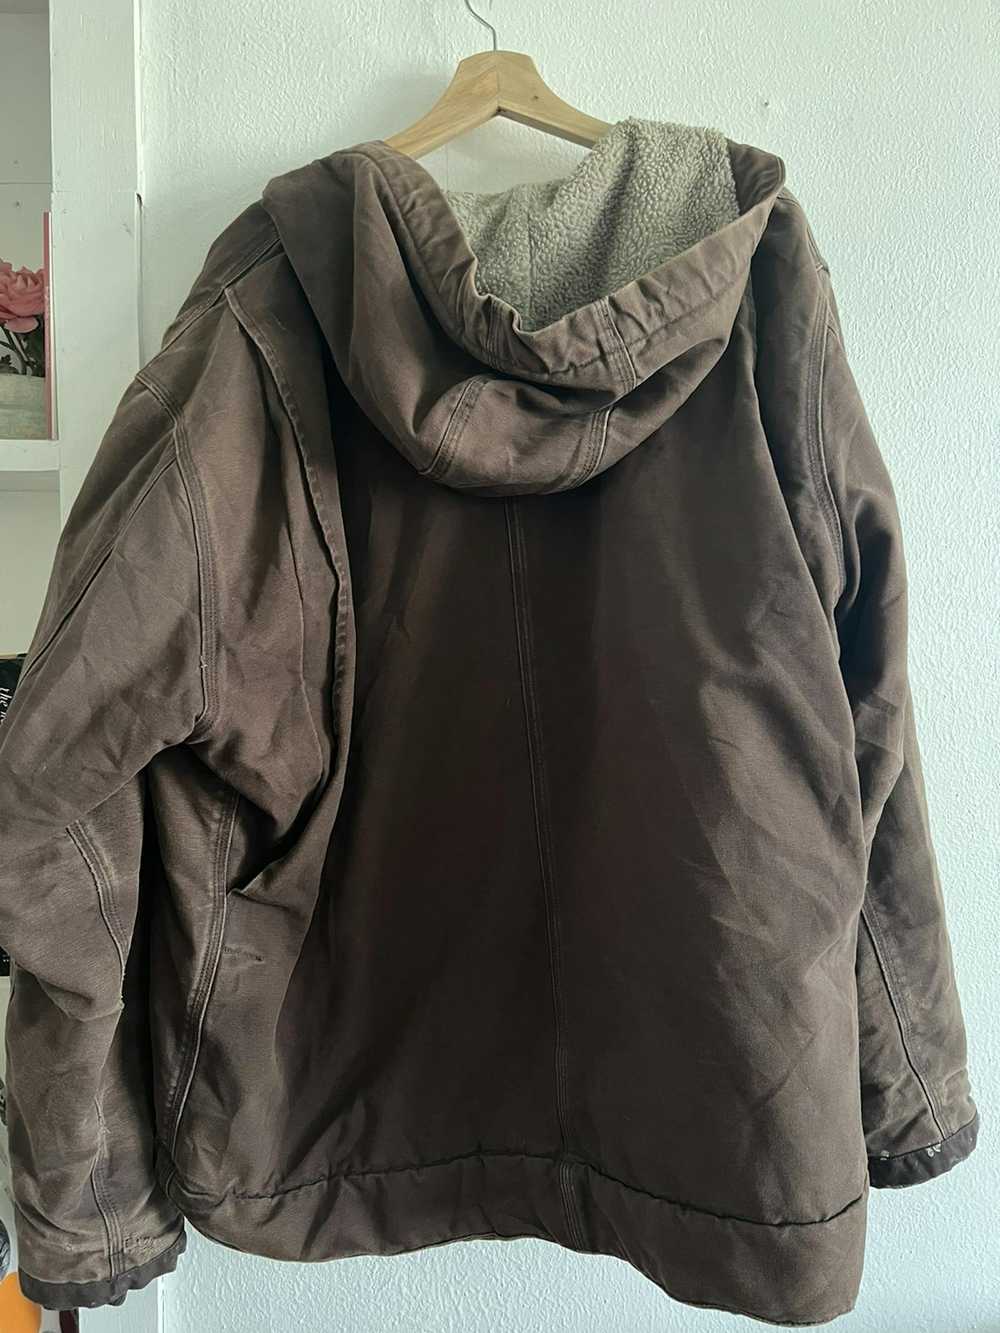 Carhartt Unisex Carhartt jacket in XL - image 6